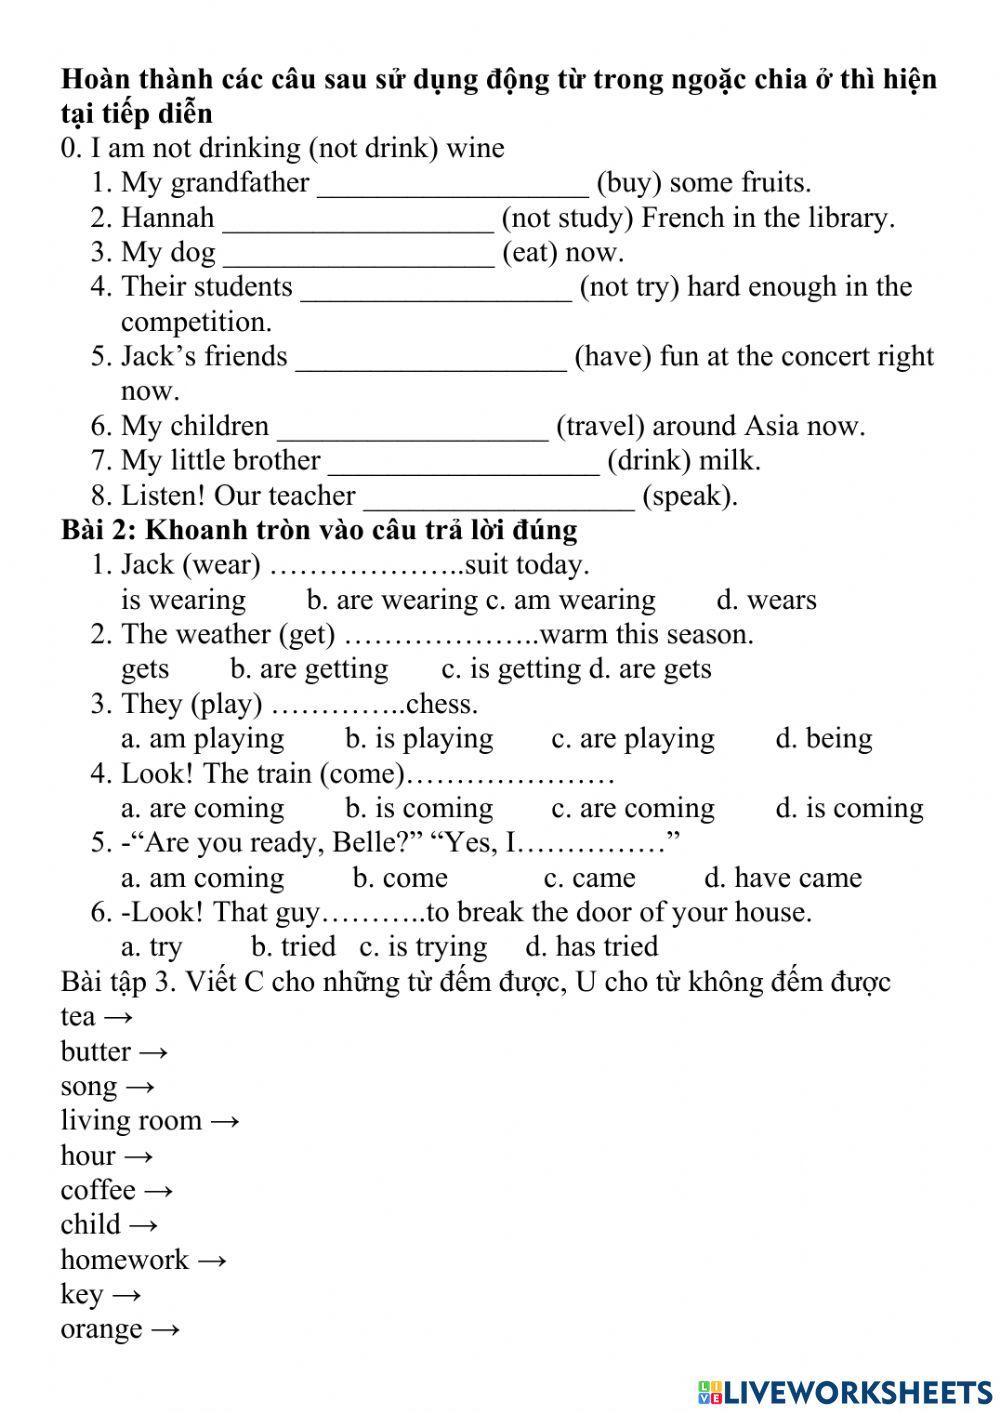 g3x2-httd-C-U nouns online exercise for | Live Worksheets